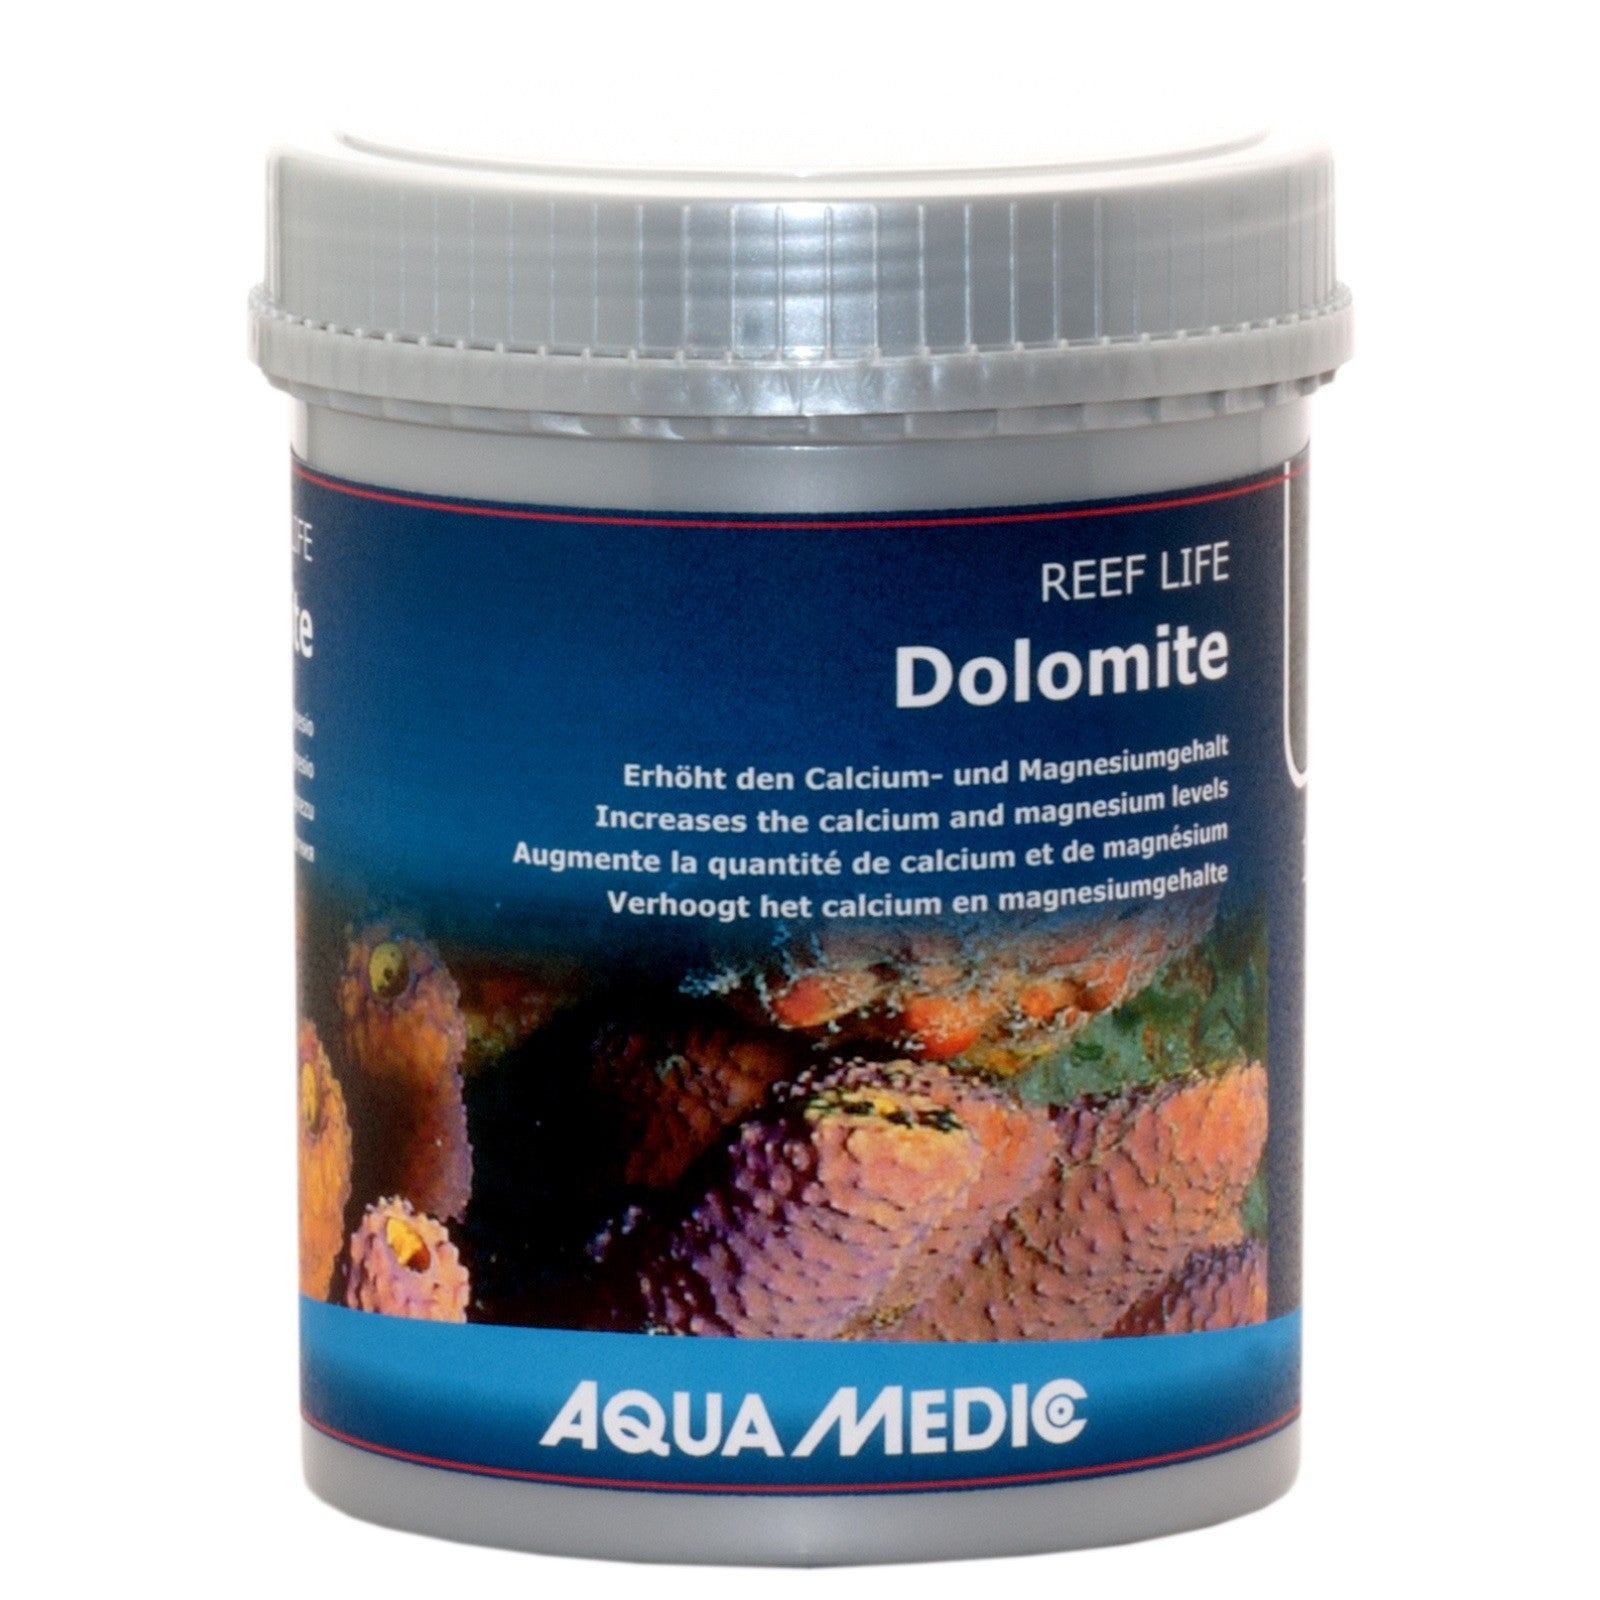 Aqua Medic Reef Dolomit 1 L -1250 gr